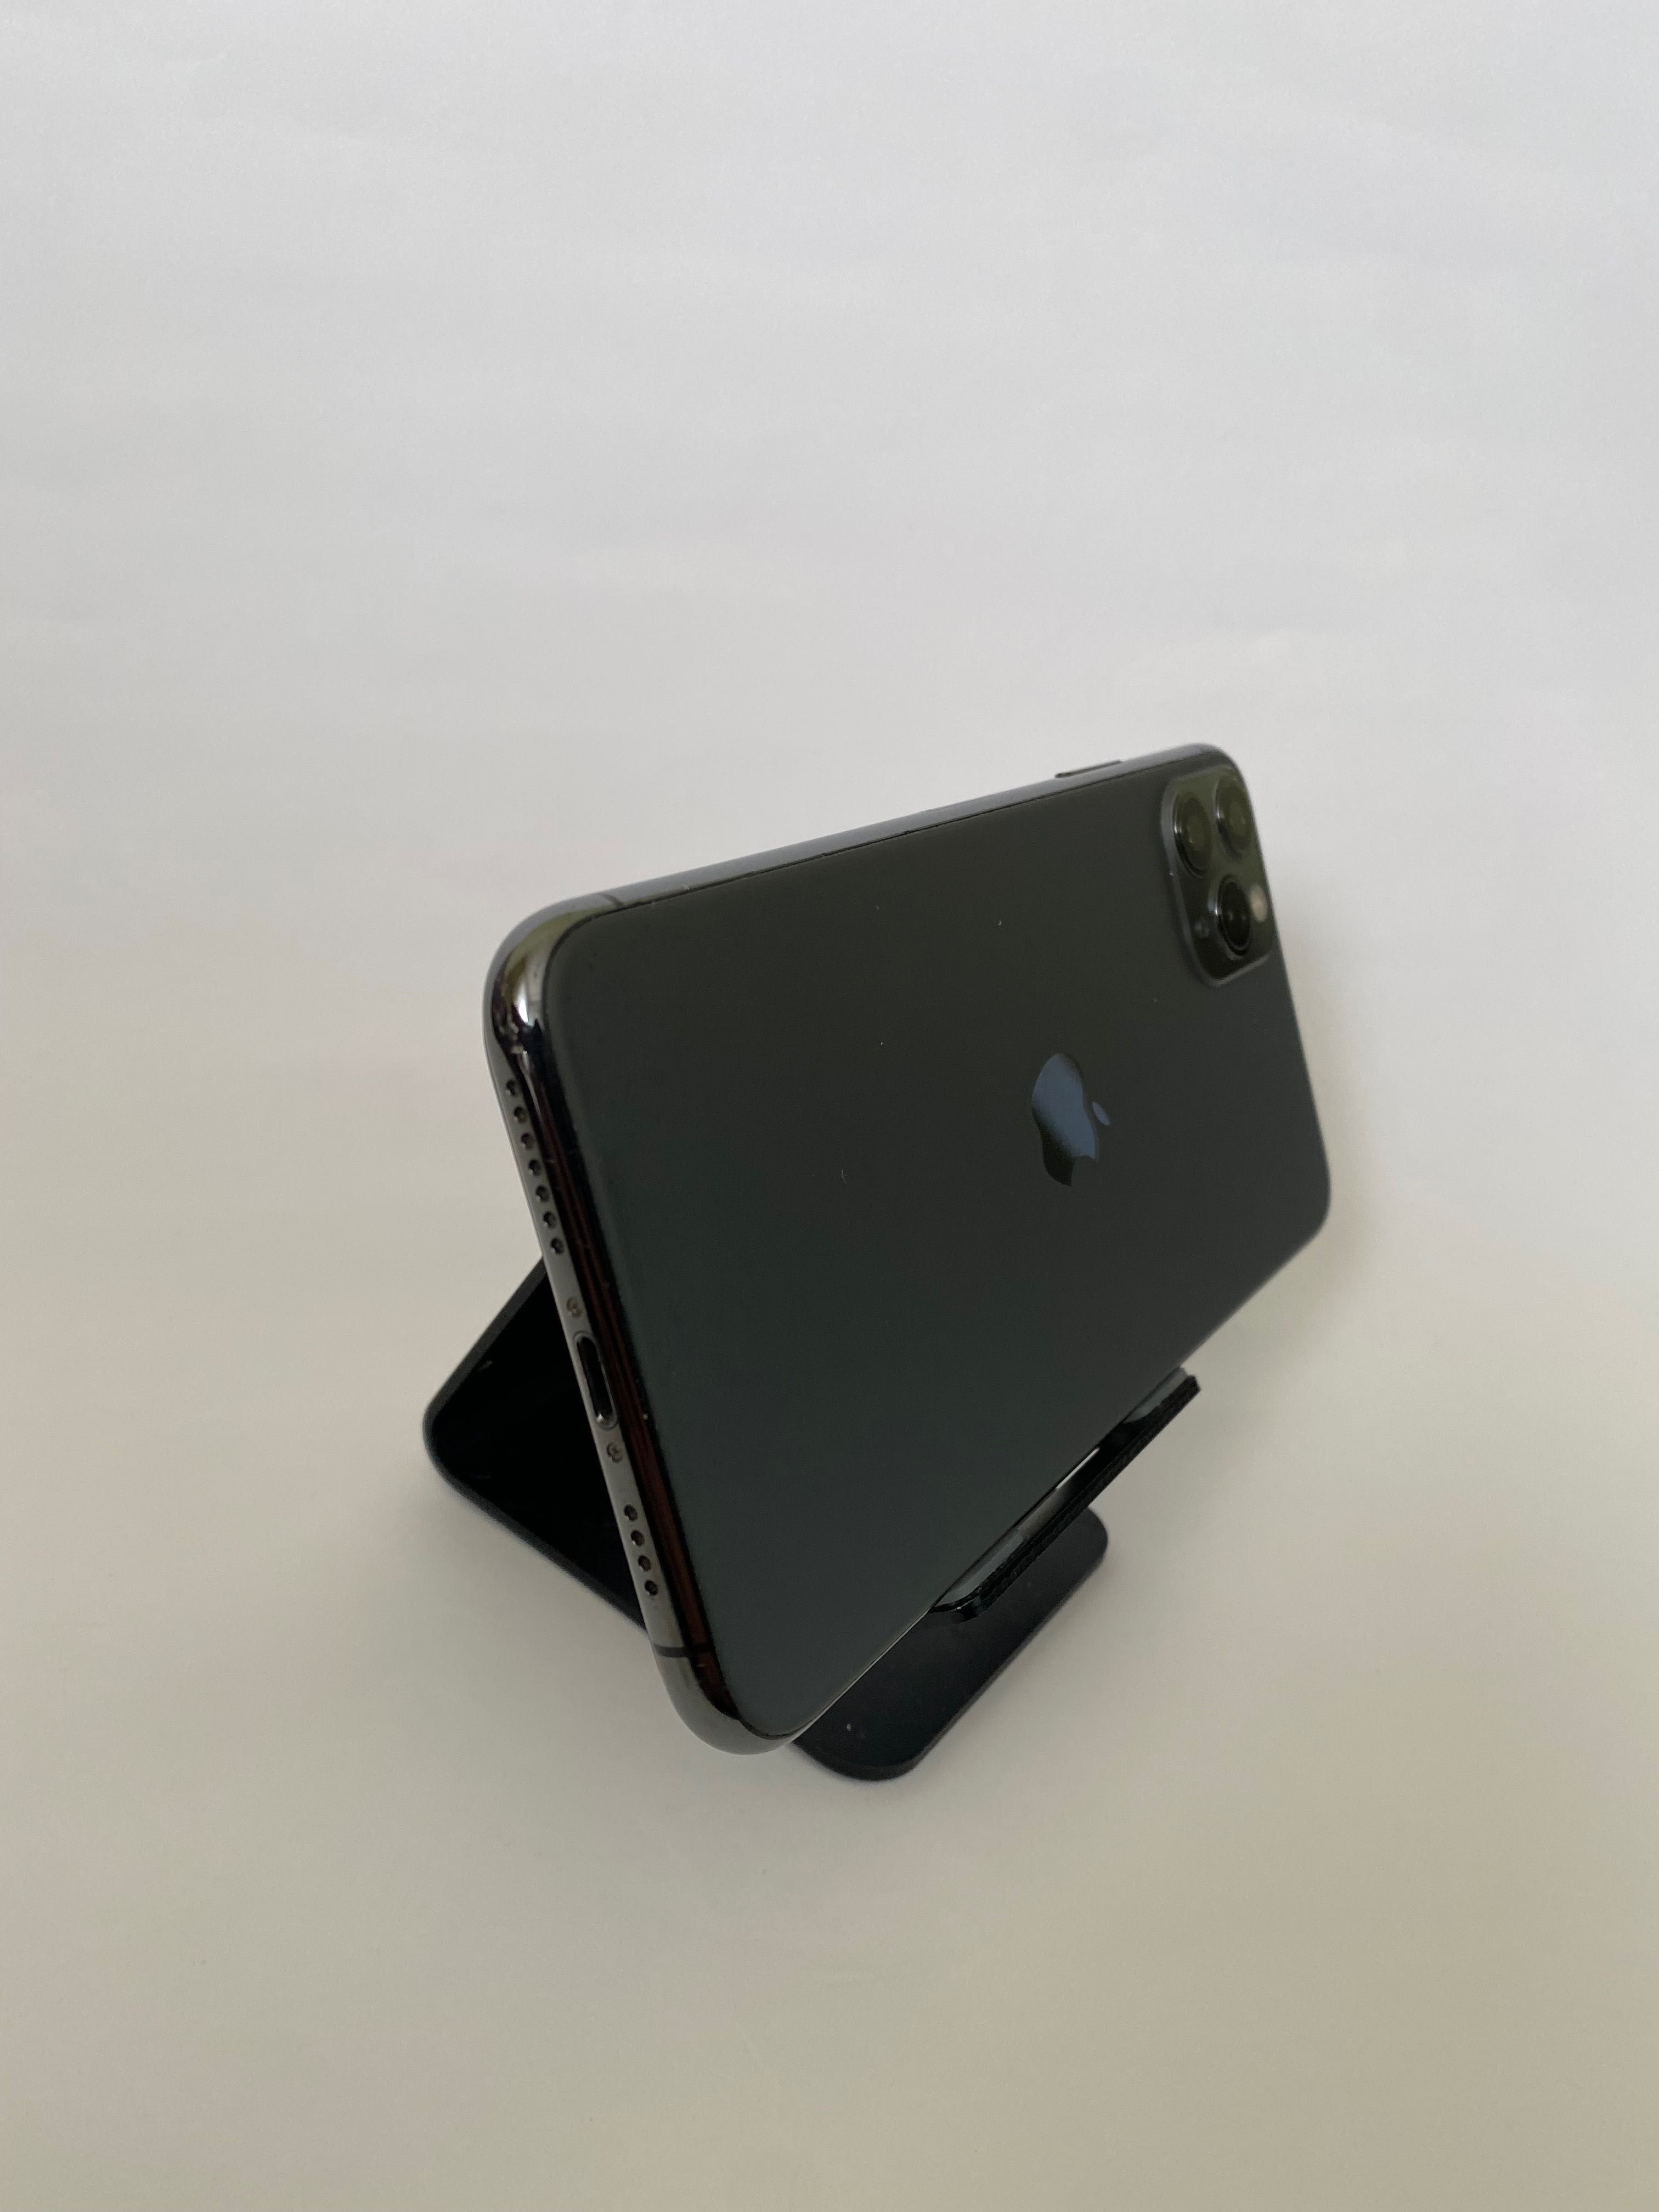 iPhone 11 Pro Max, 64gb neverlock